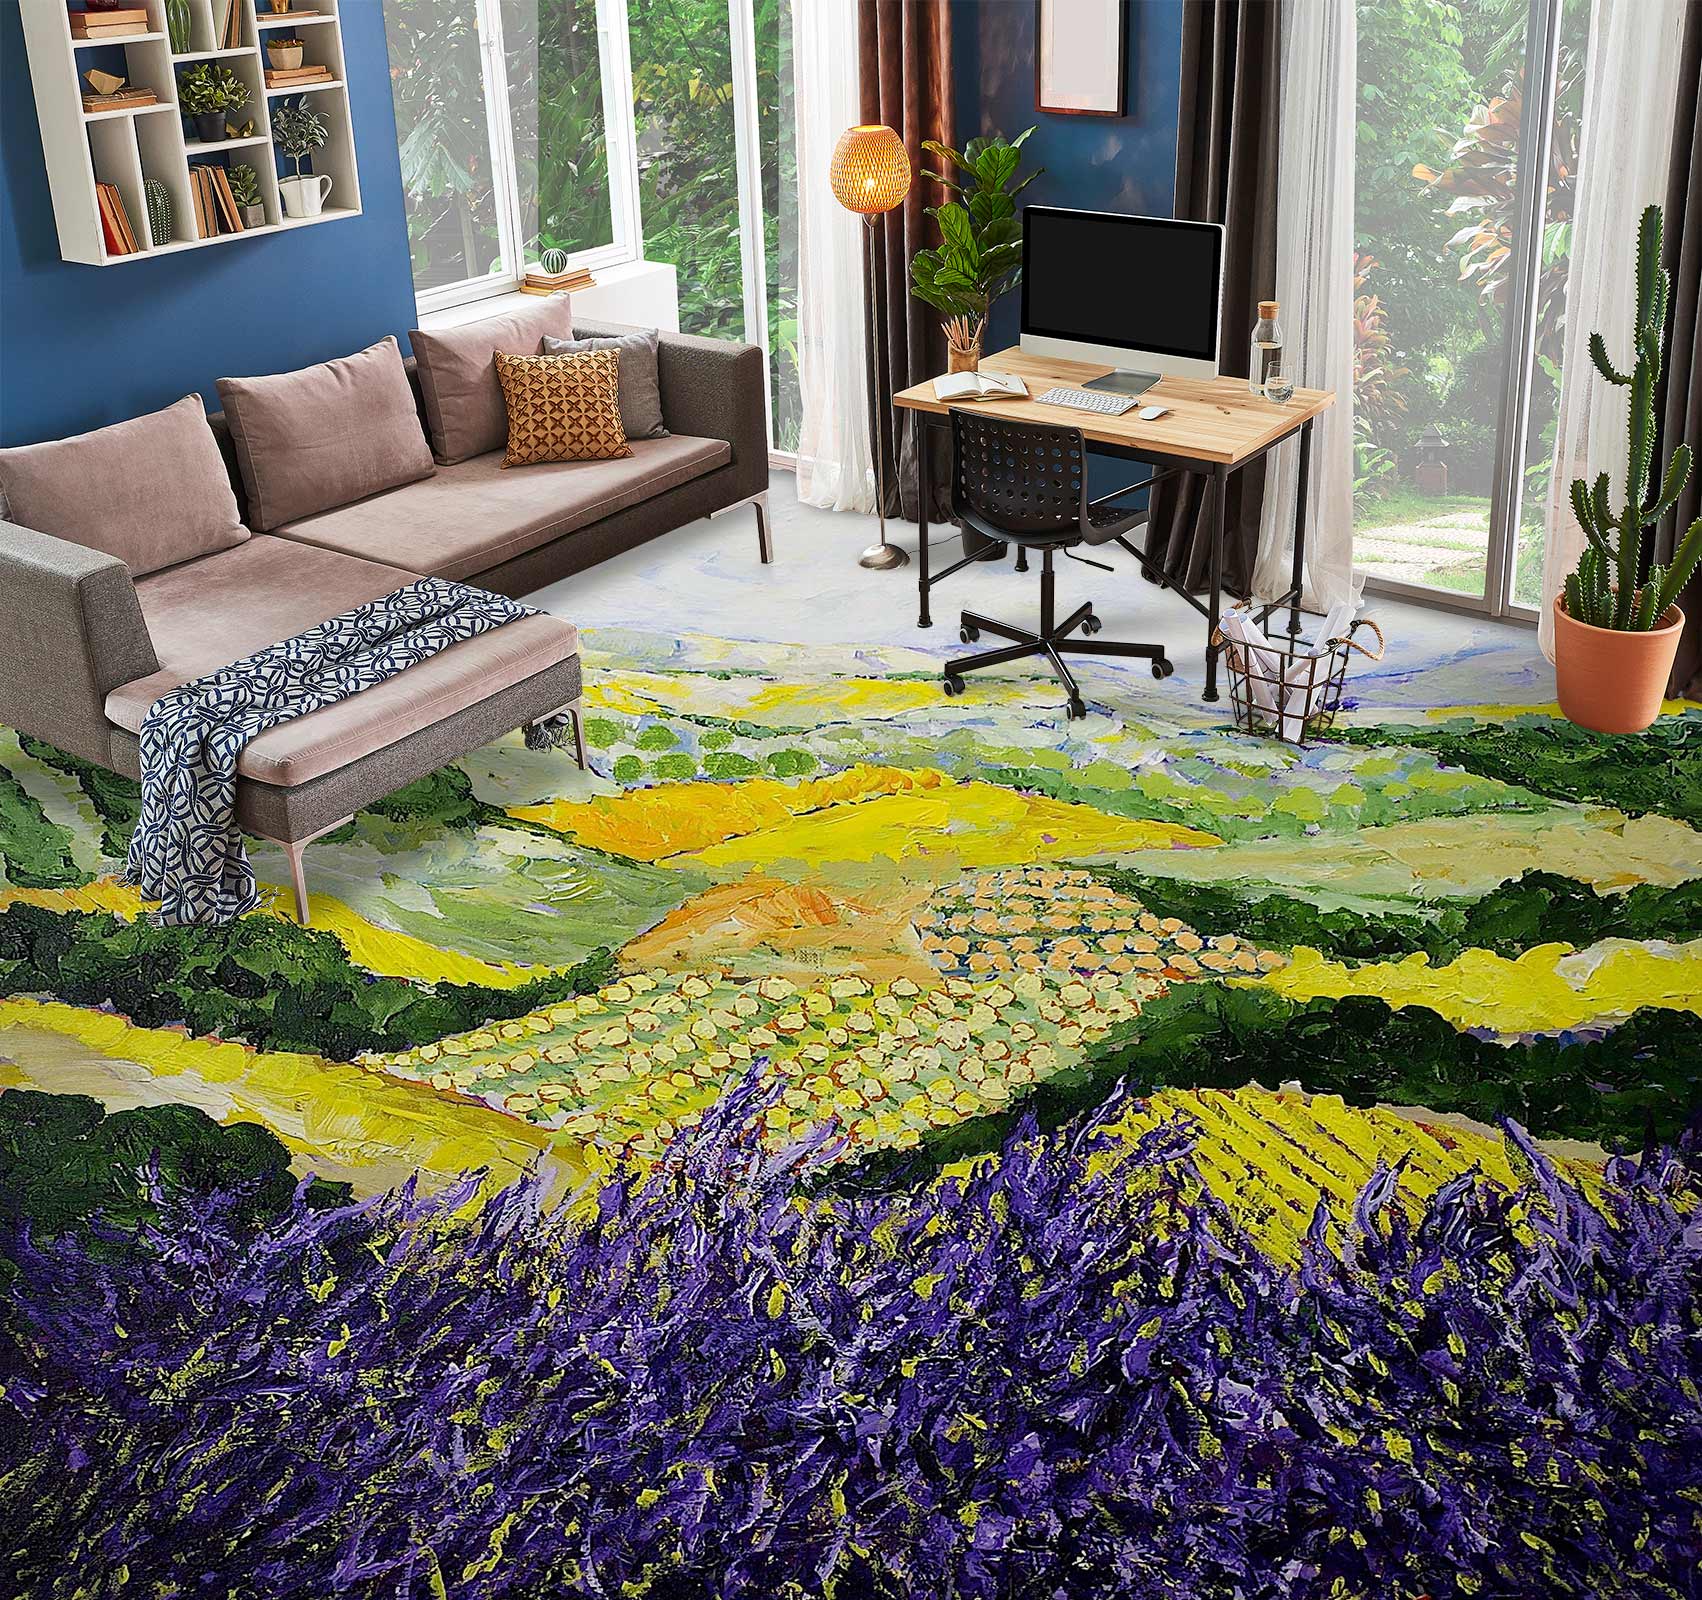 3D Field Purple Flowers 9526 Allan P. Friedlander Floor Mural  Wallpaper Murals Self-Adhesive Removable Print Epoxy